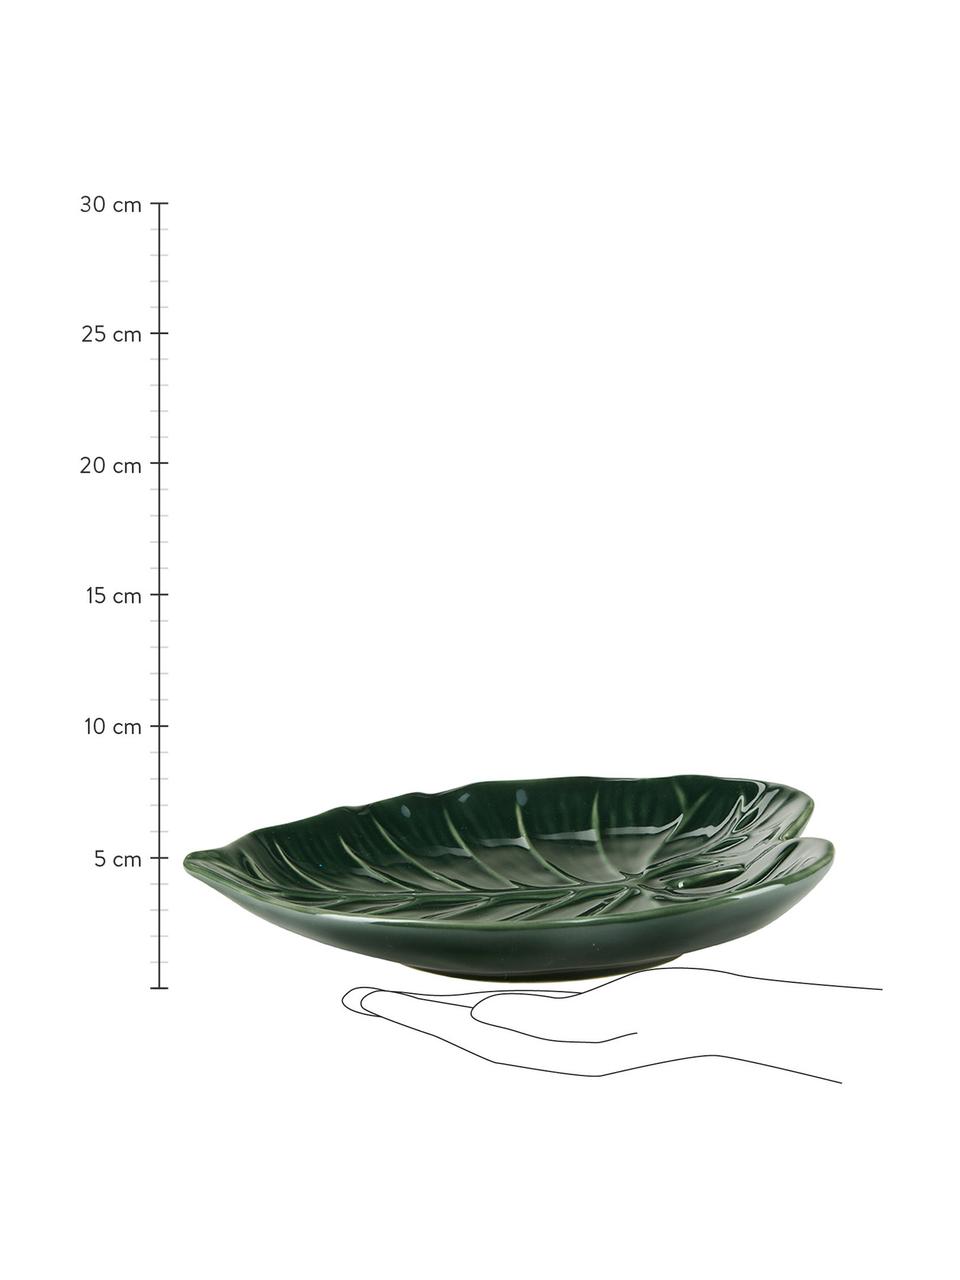 Fuente de porcelan Leaf, Porcelana, Verde, L 25 x An 20 cm